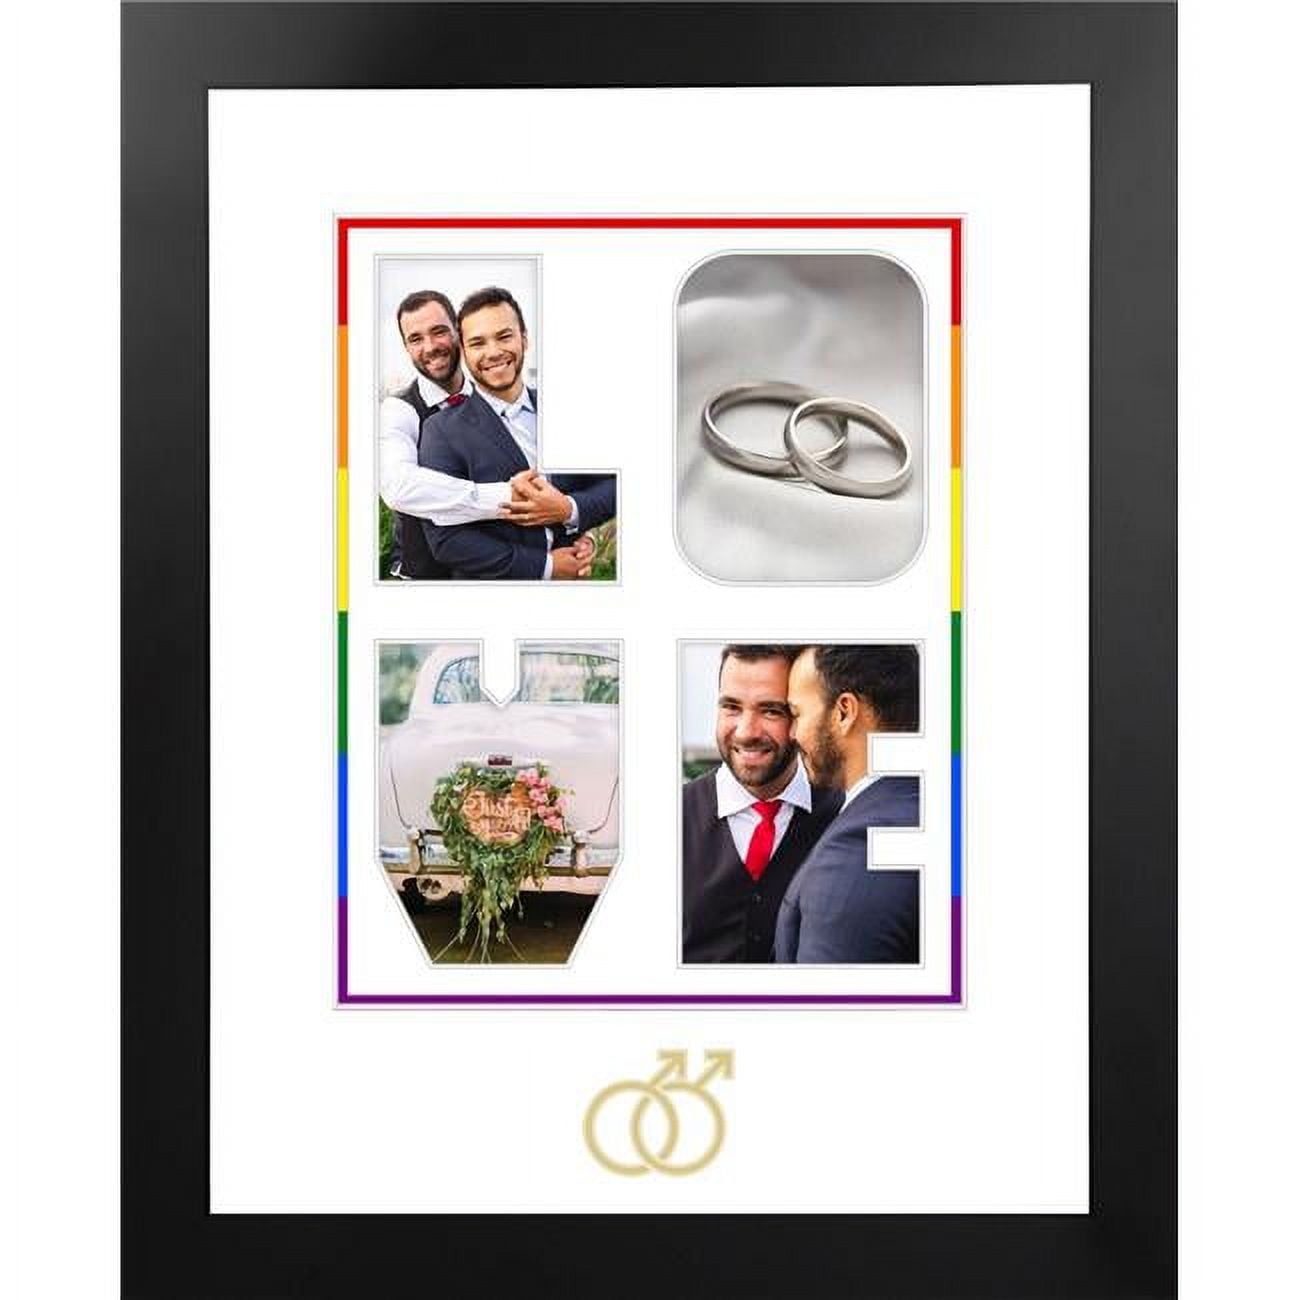 Ssmswg03 Lgbtq Pride Wedding Love Snapshot Photo Frame With White & Rainbow Mat - Gold Interlocking Man